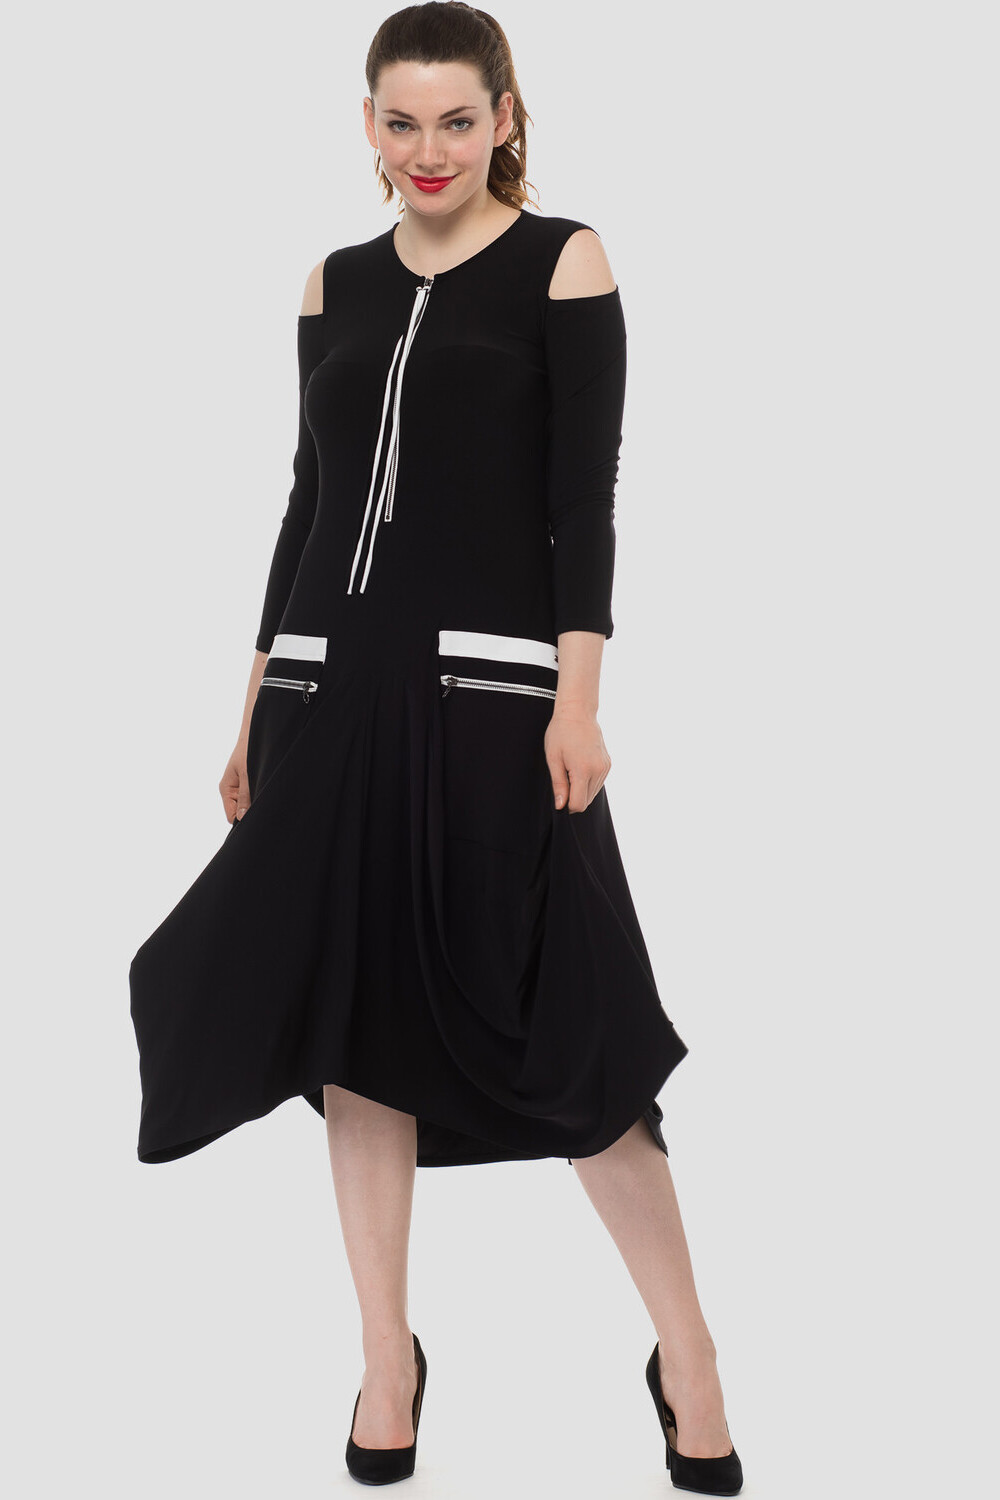 Joseph Ribkoff dress style 183003. Black/vanilla